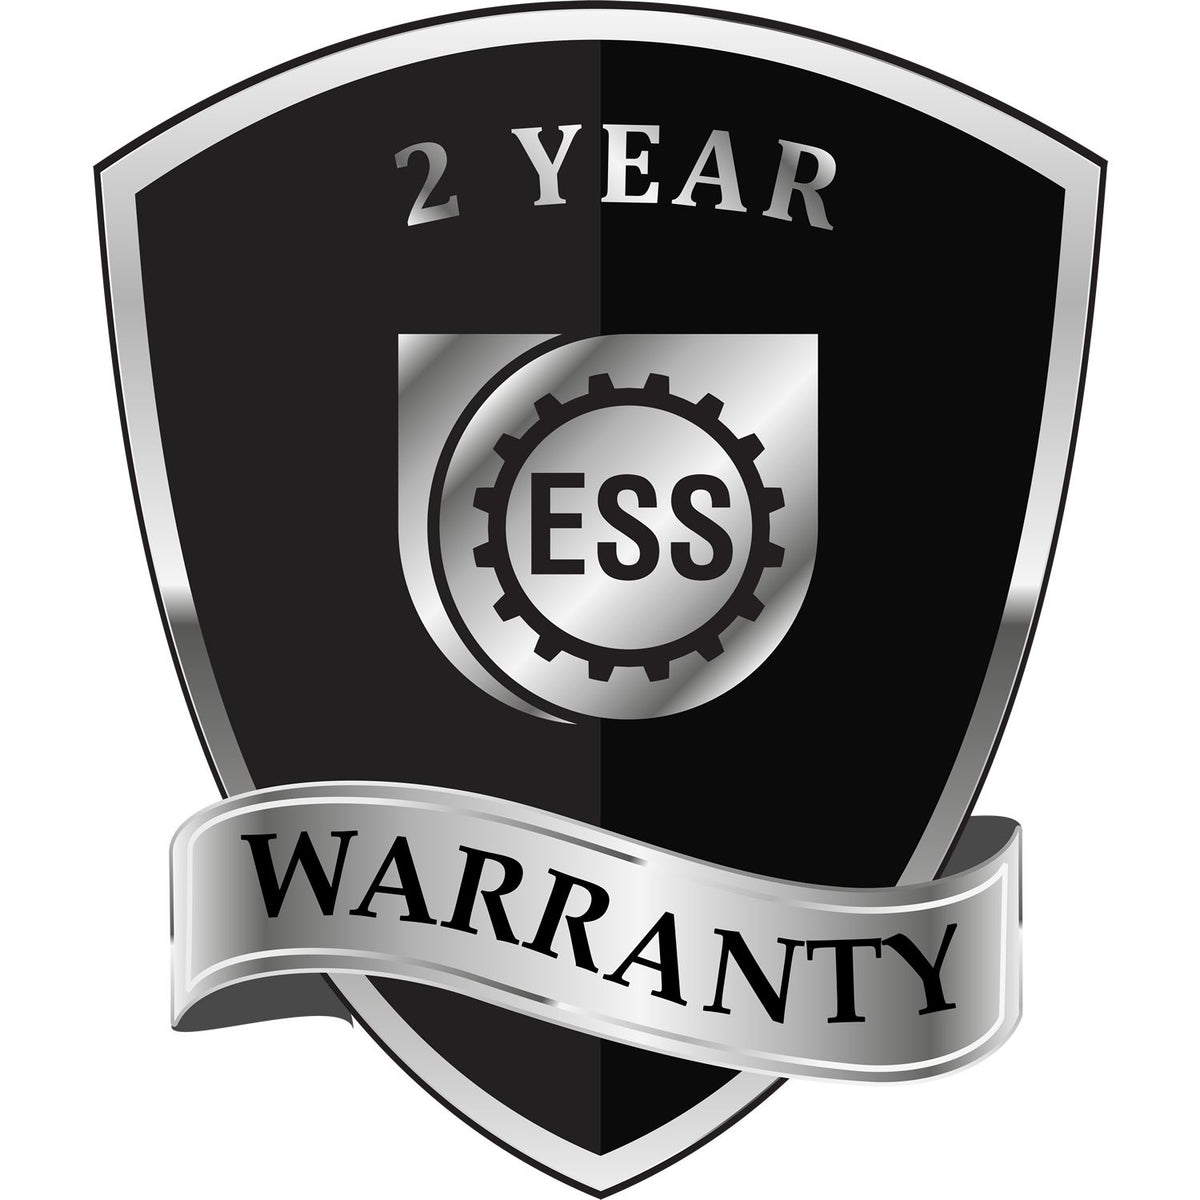 A black and silver badge or emblem showing warranty information for the Hybrid New Jersey Land Surveyor Seal